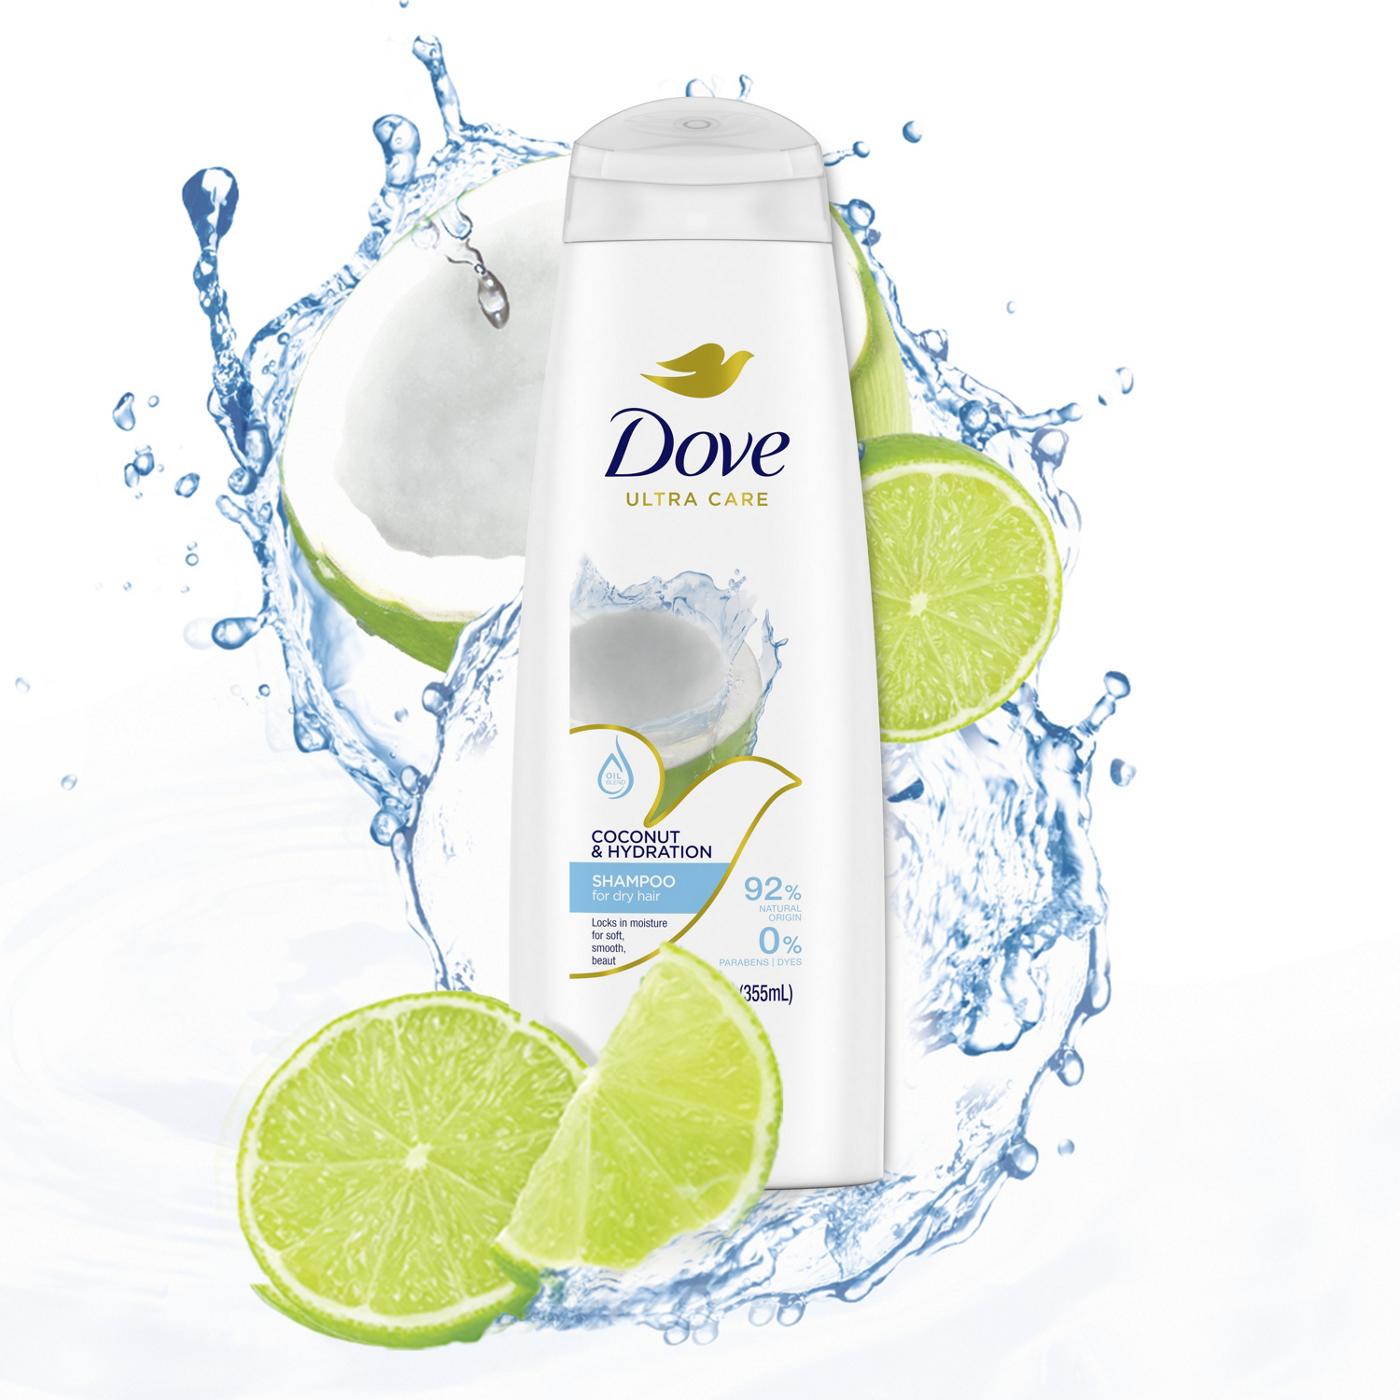 Dove Ultra Care Shampoo - Coconut & Hydration; image 5 of 11